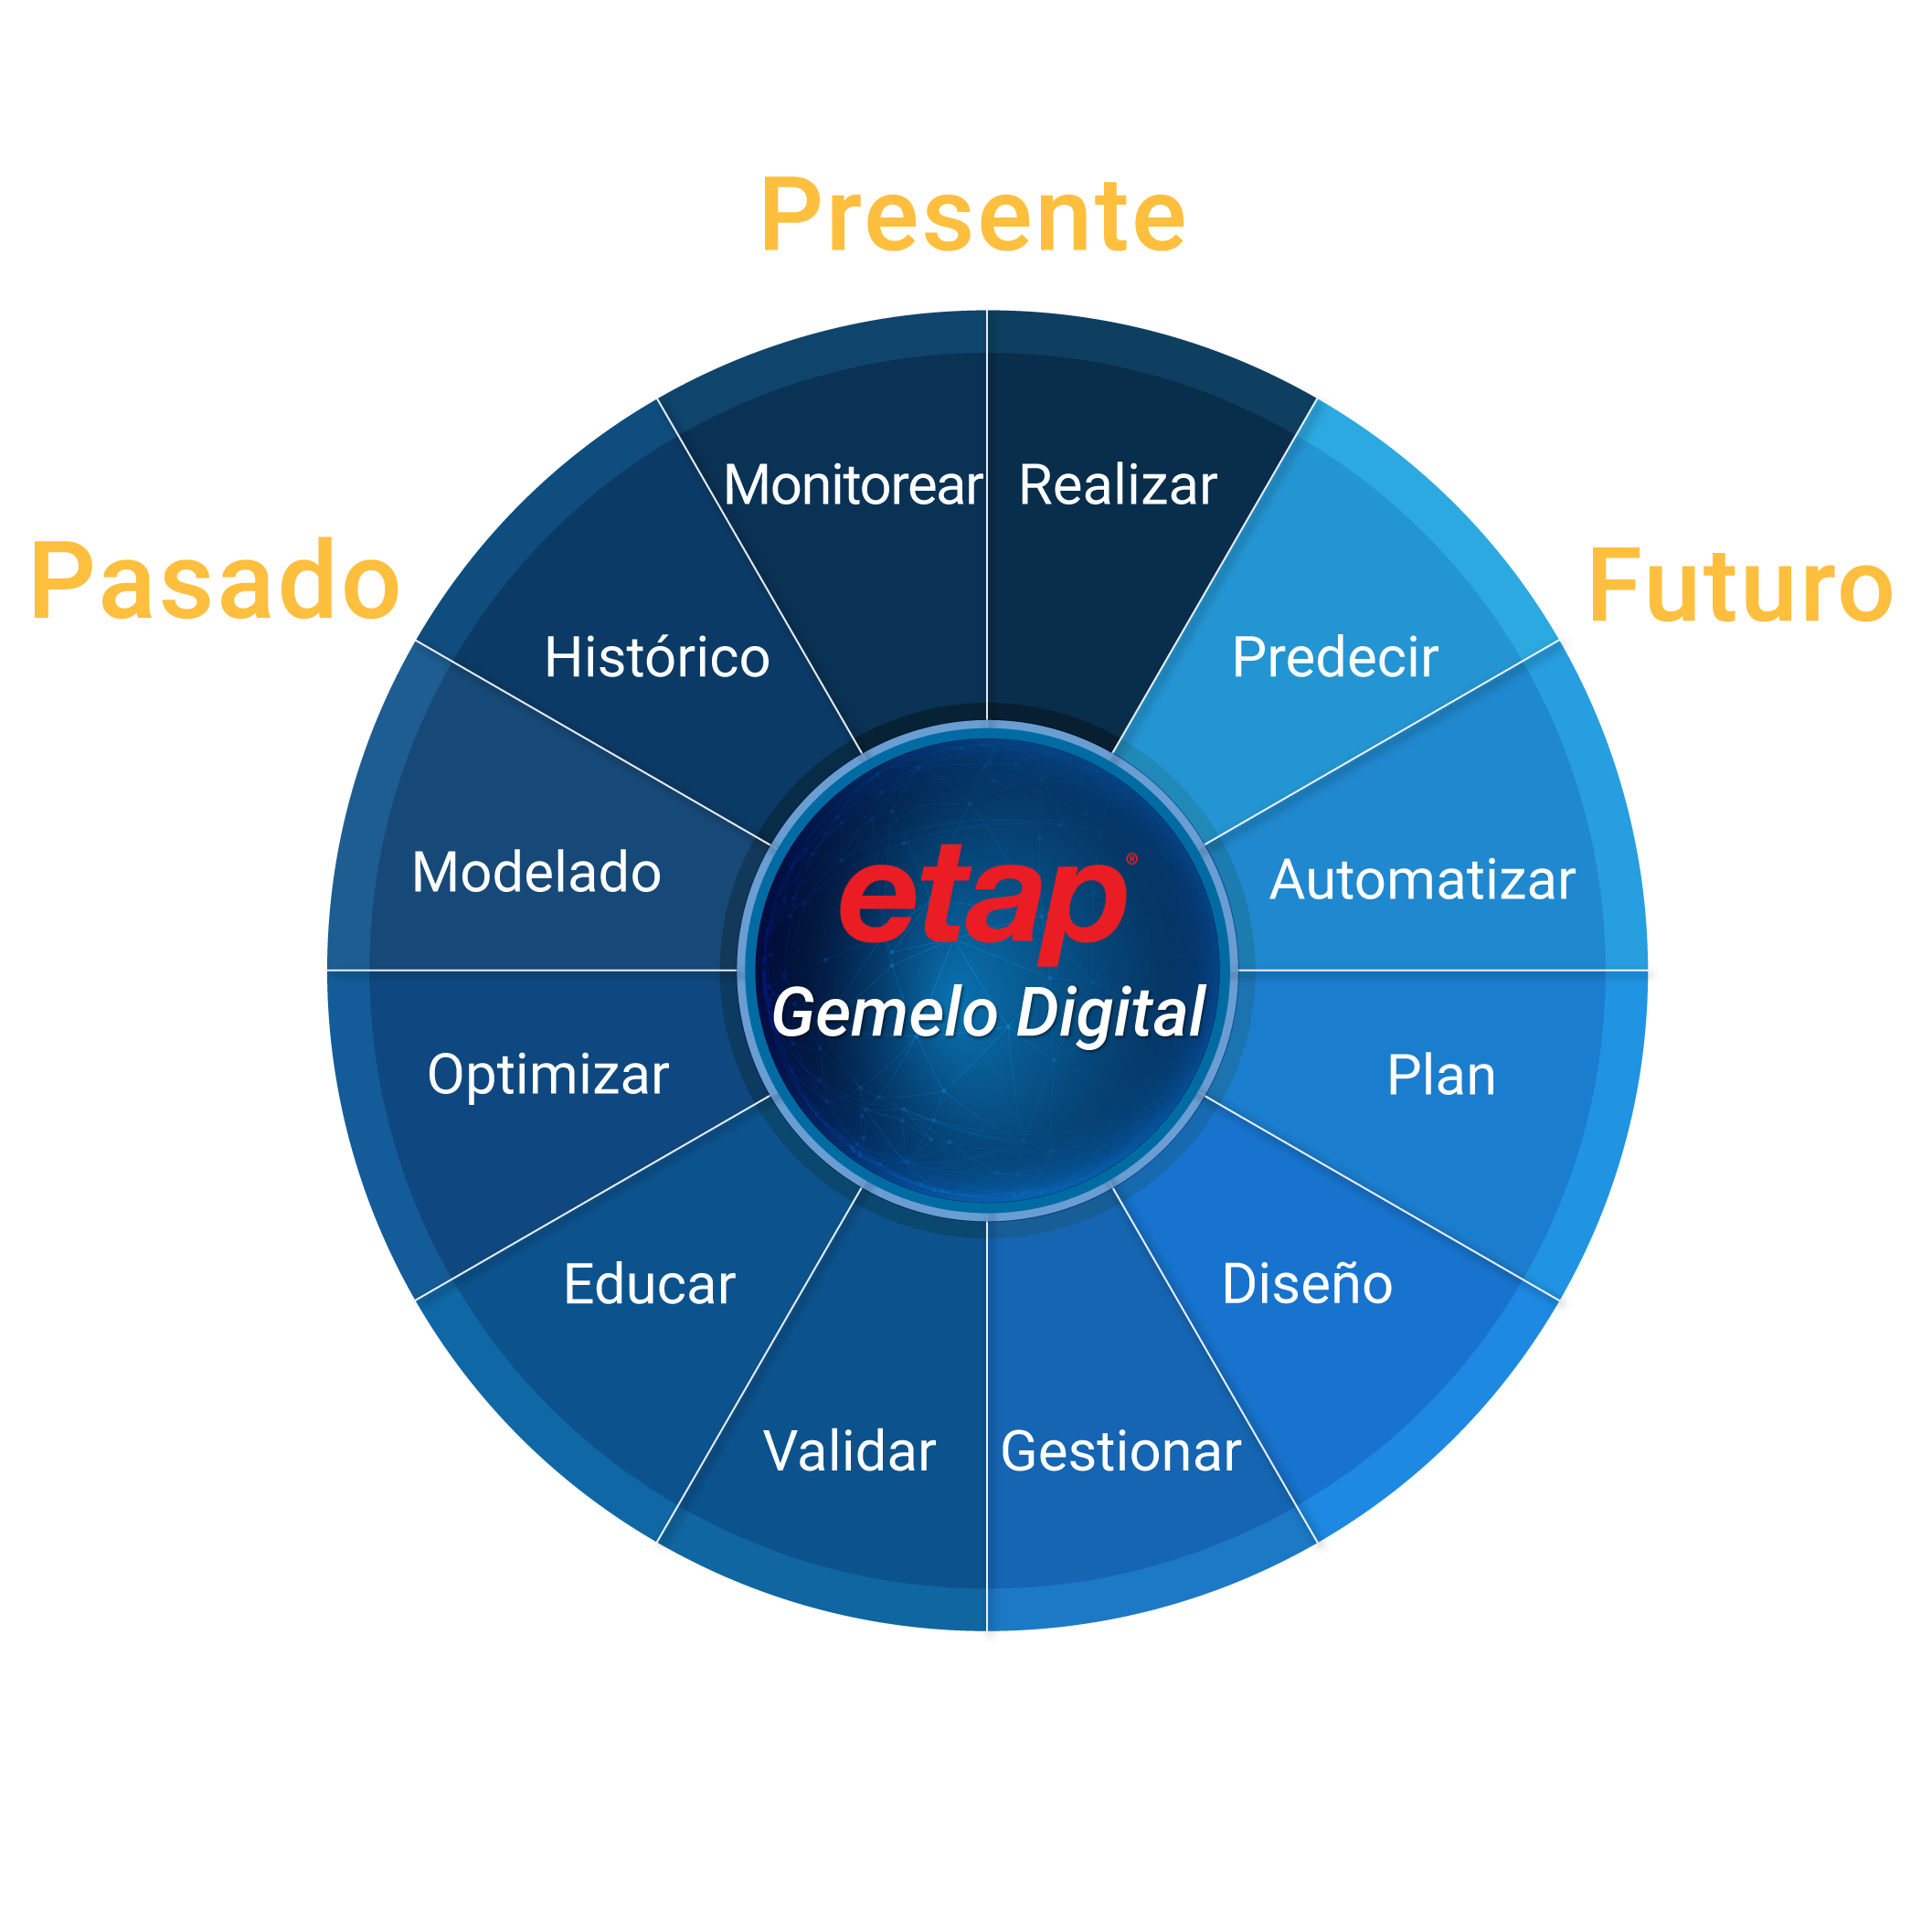 ETAP Electrical Digital Twin Platform